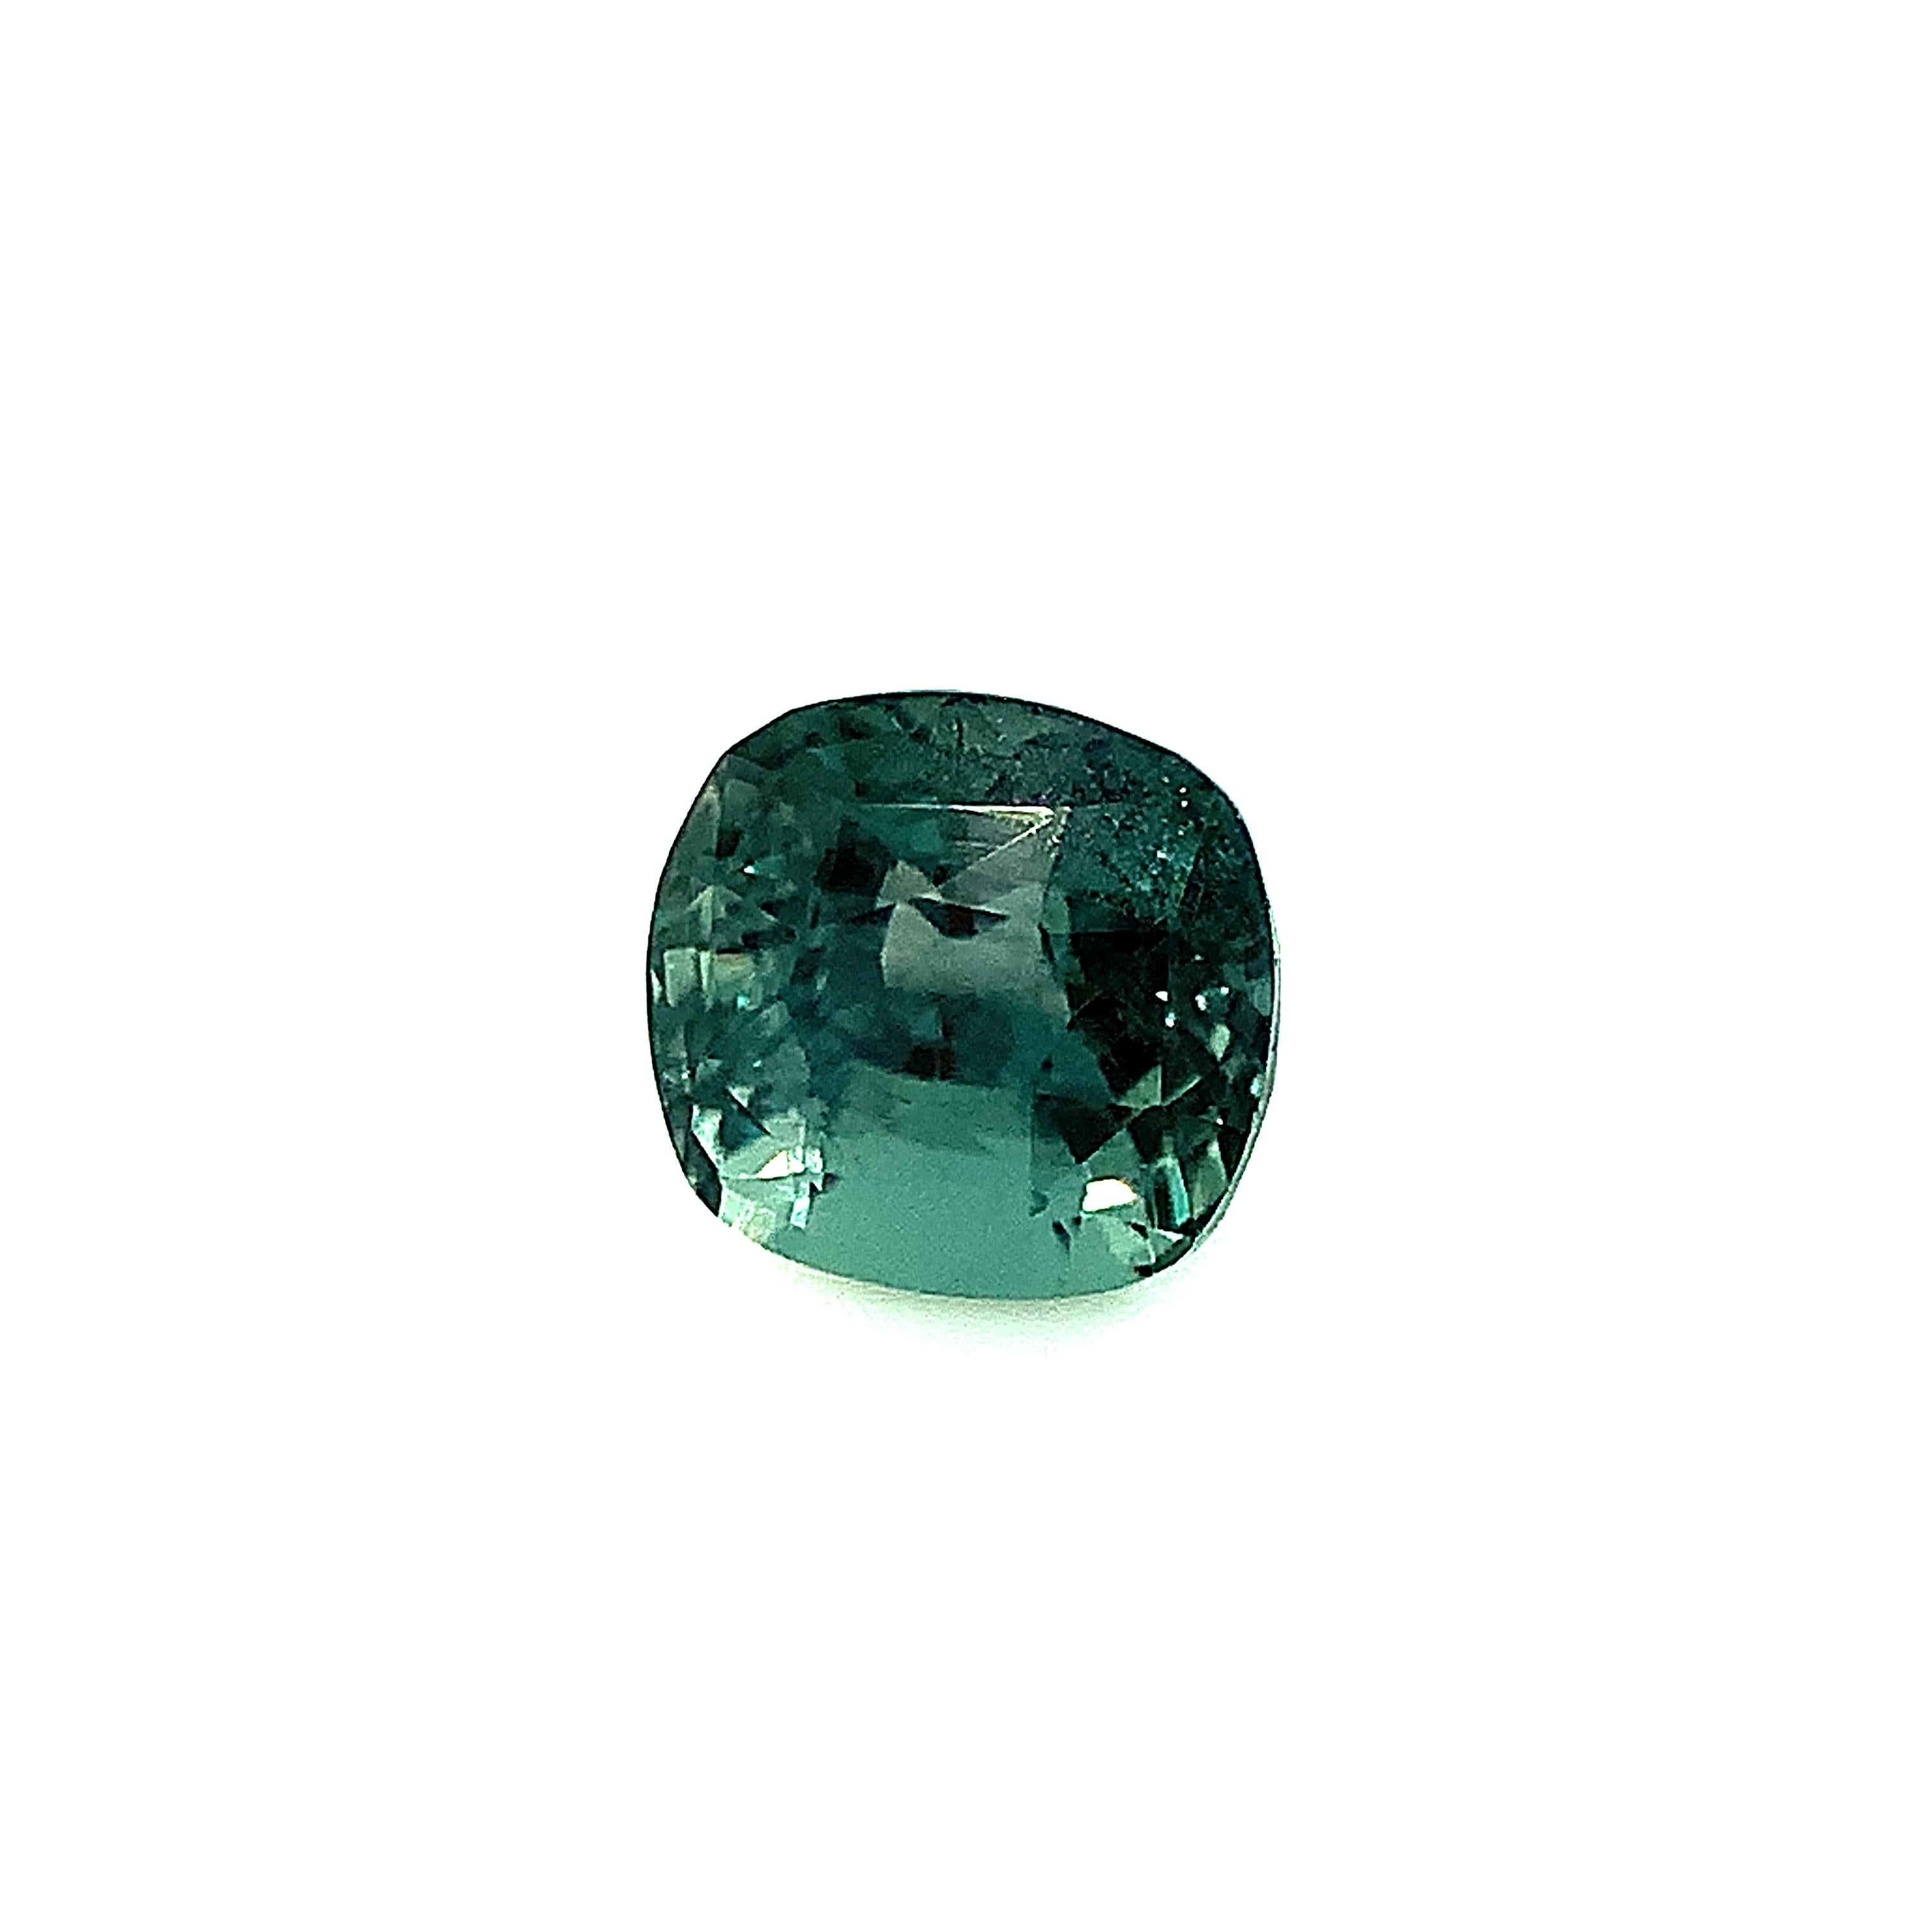 Alexandrite Chrysoberyl 1.16 Carat Loose Gemstone, GIA Certified - RTP For Sale 5